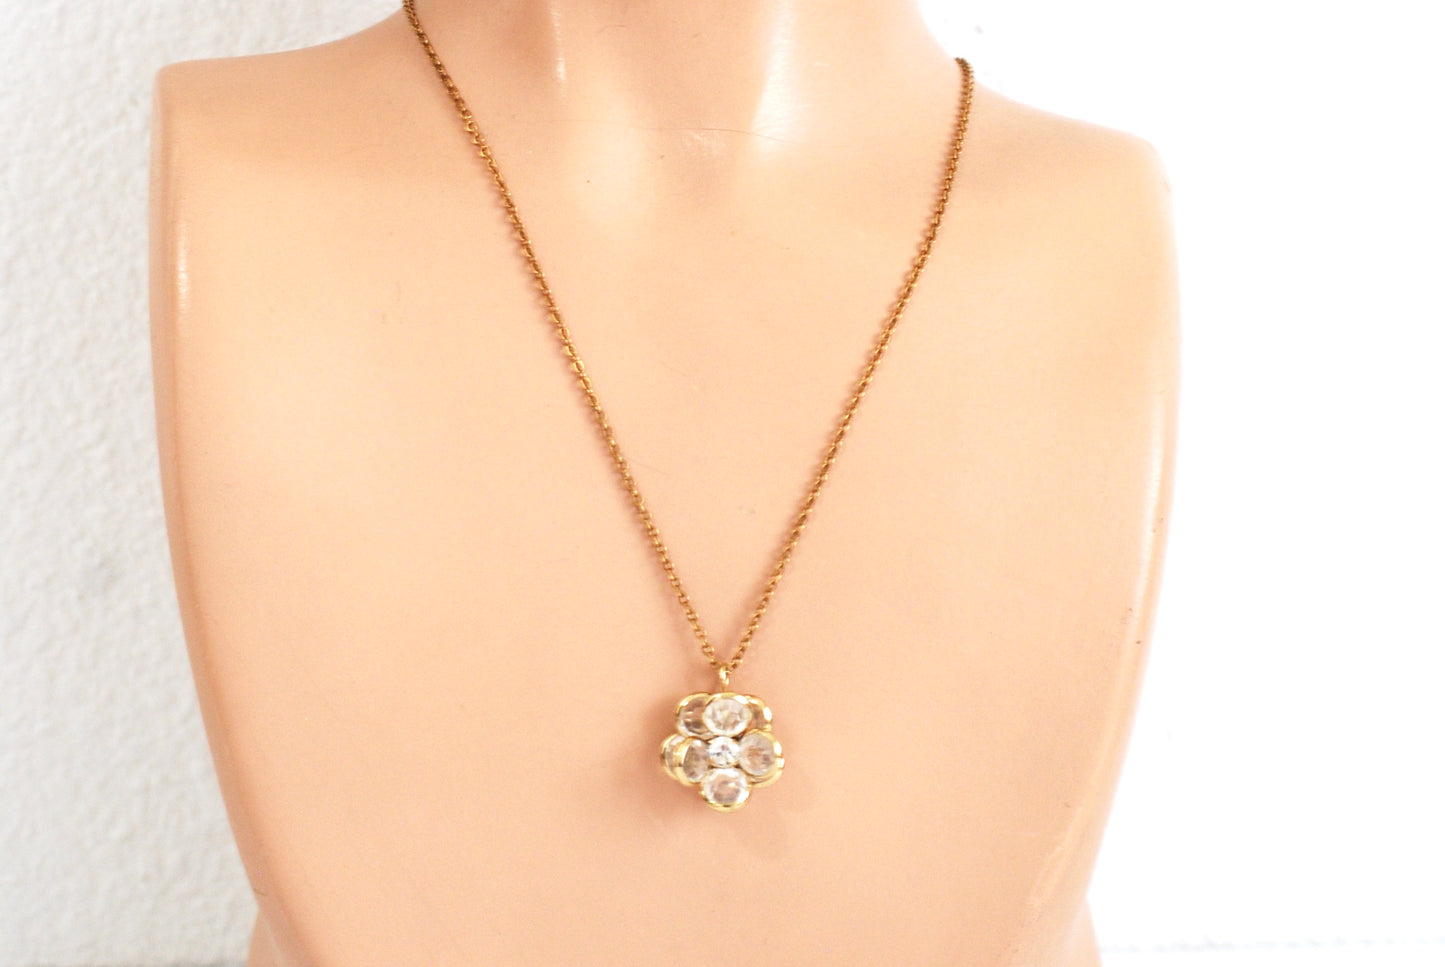 Vintage Crystal Flower Pendant Necklace Gold Plated